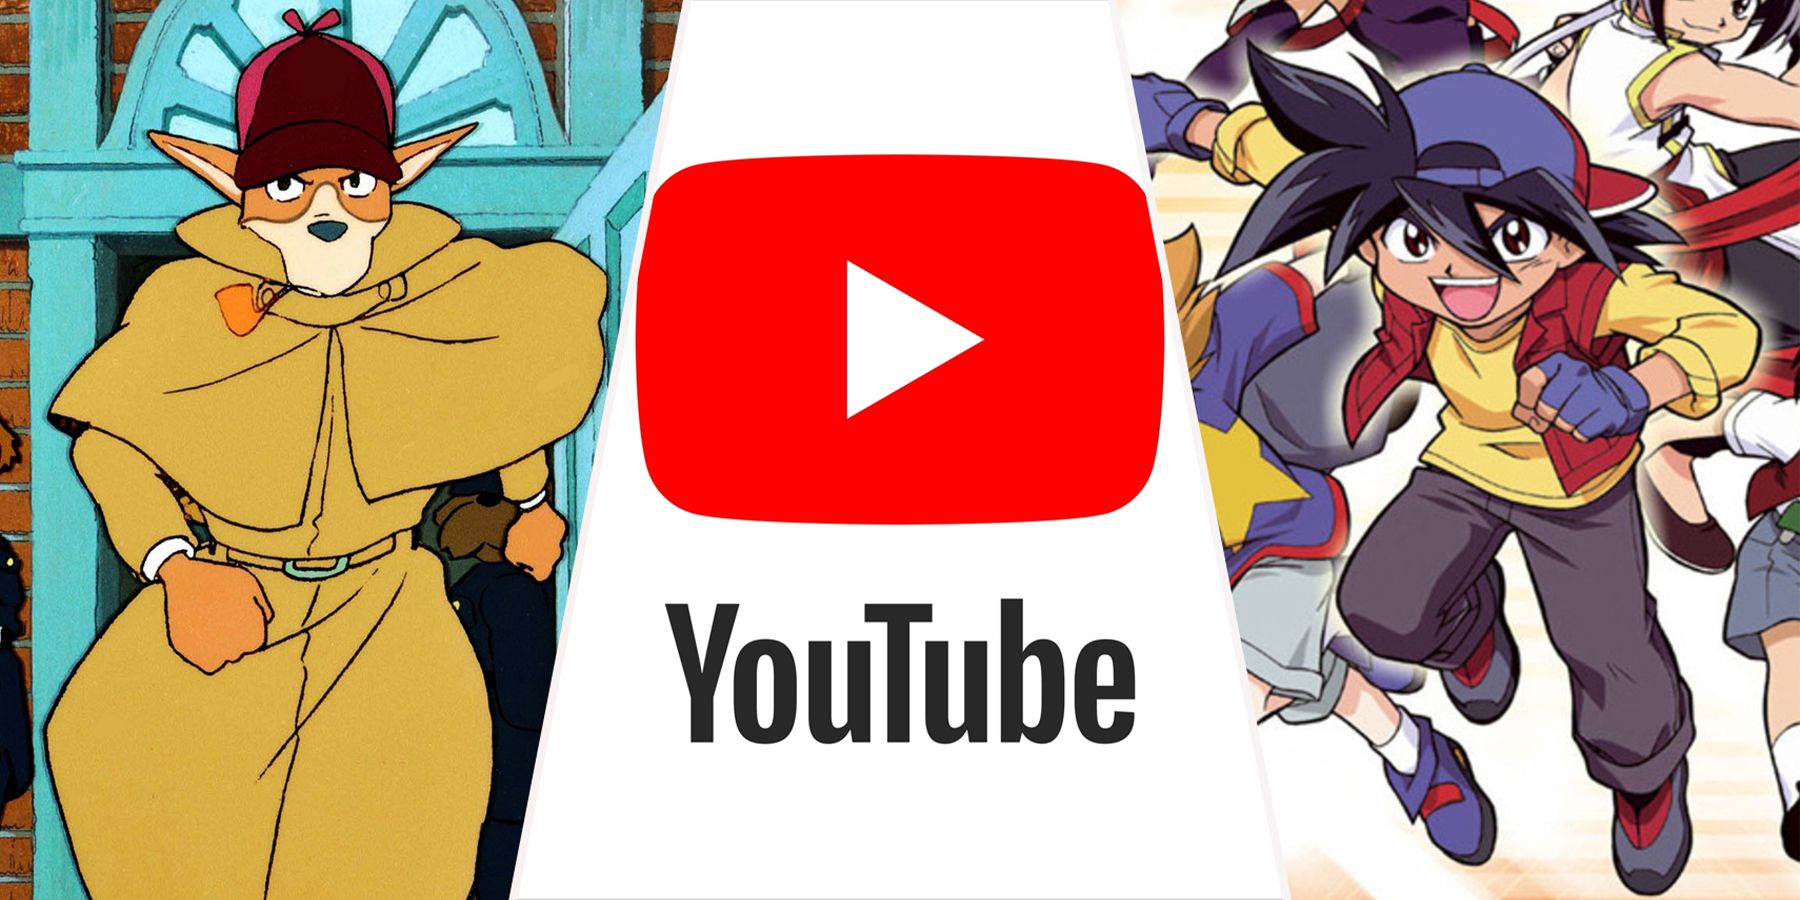 gratis youtube anime beyblade sherlock hound